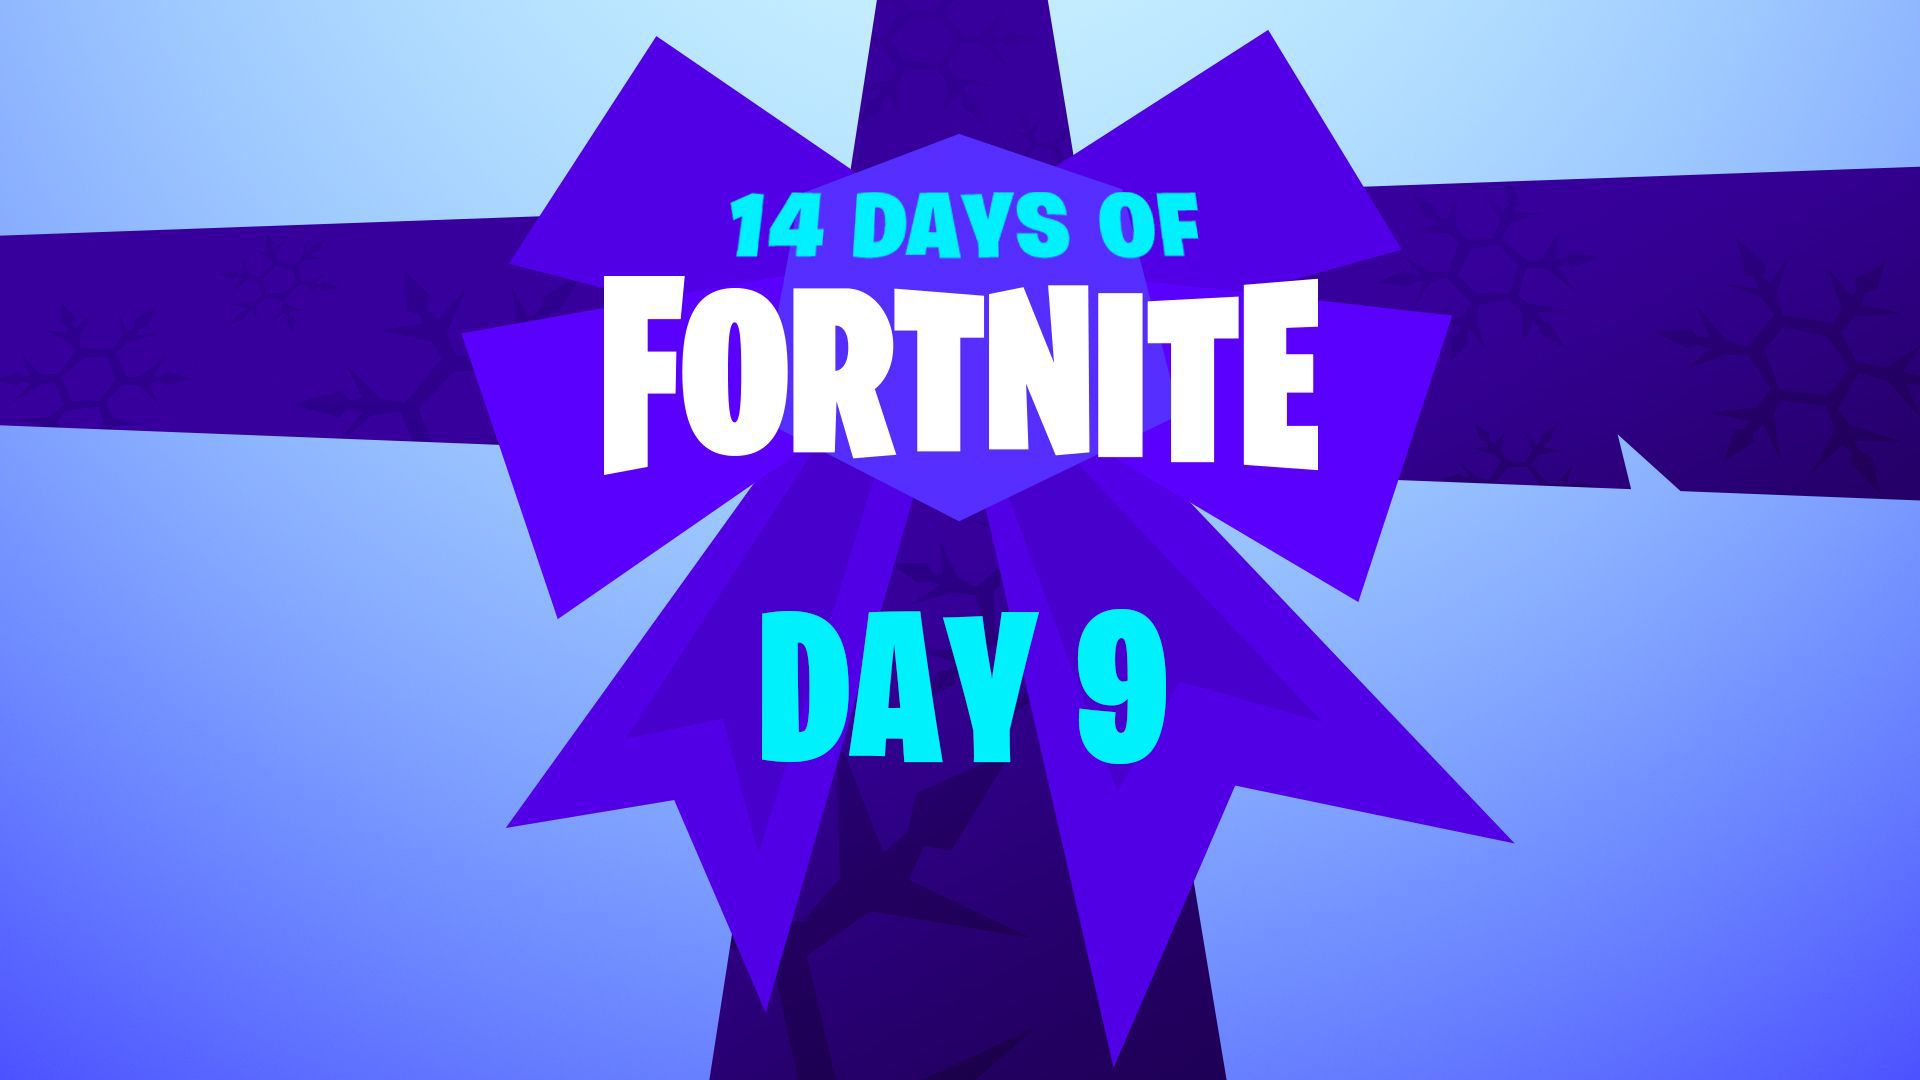 14 Days of Fortnite - Day 9 challenge & reward